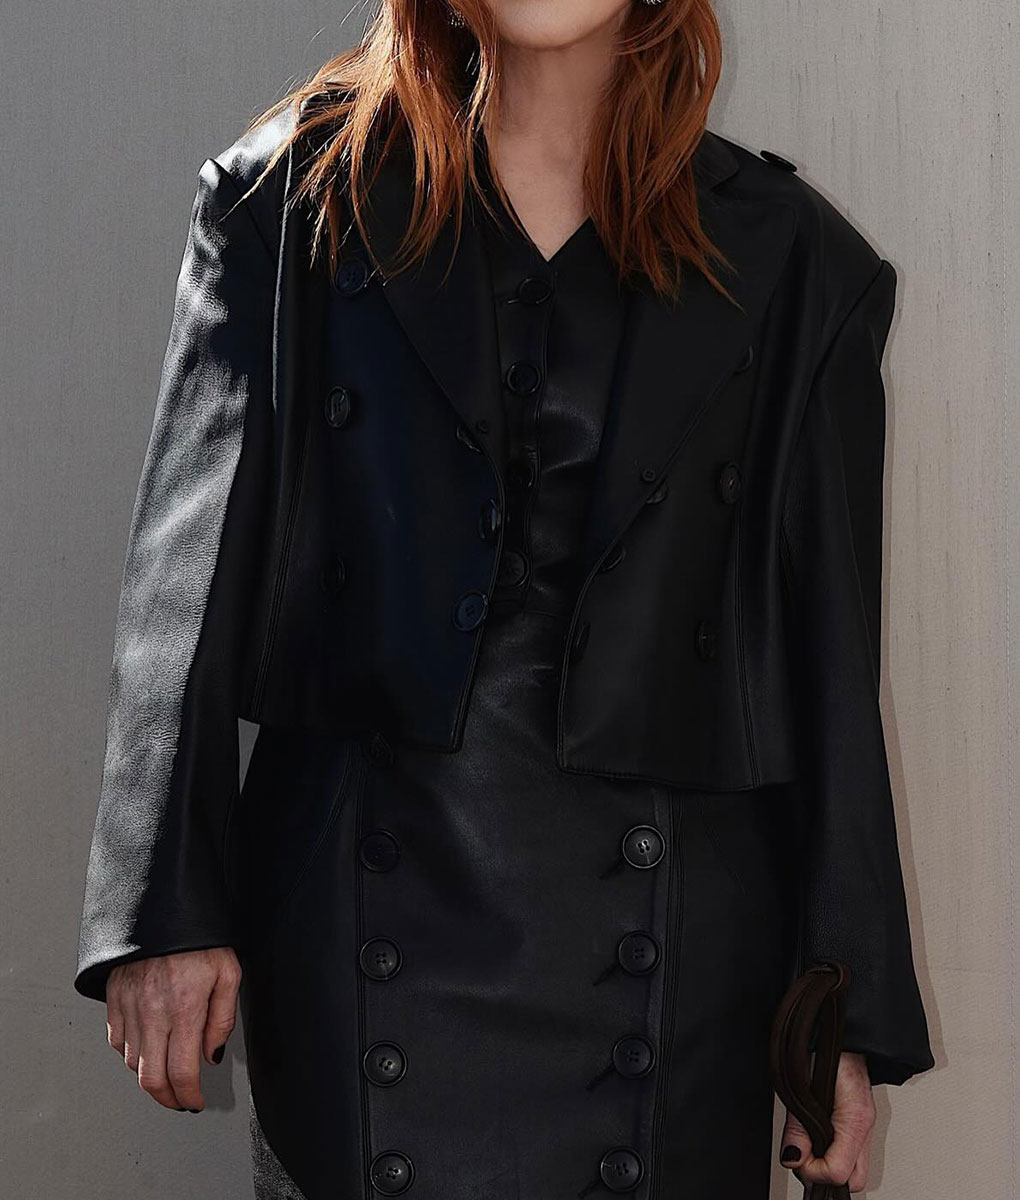 Julianne Moore AFI Awards Black Leather Blazer (2)